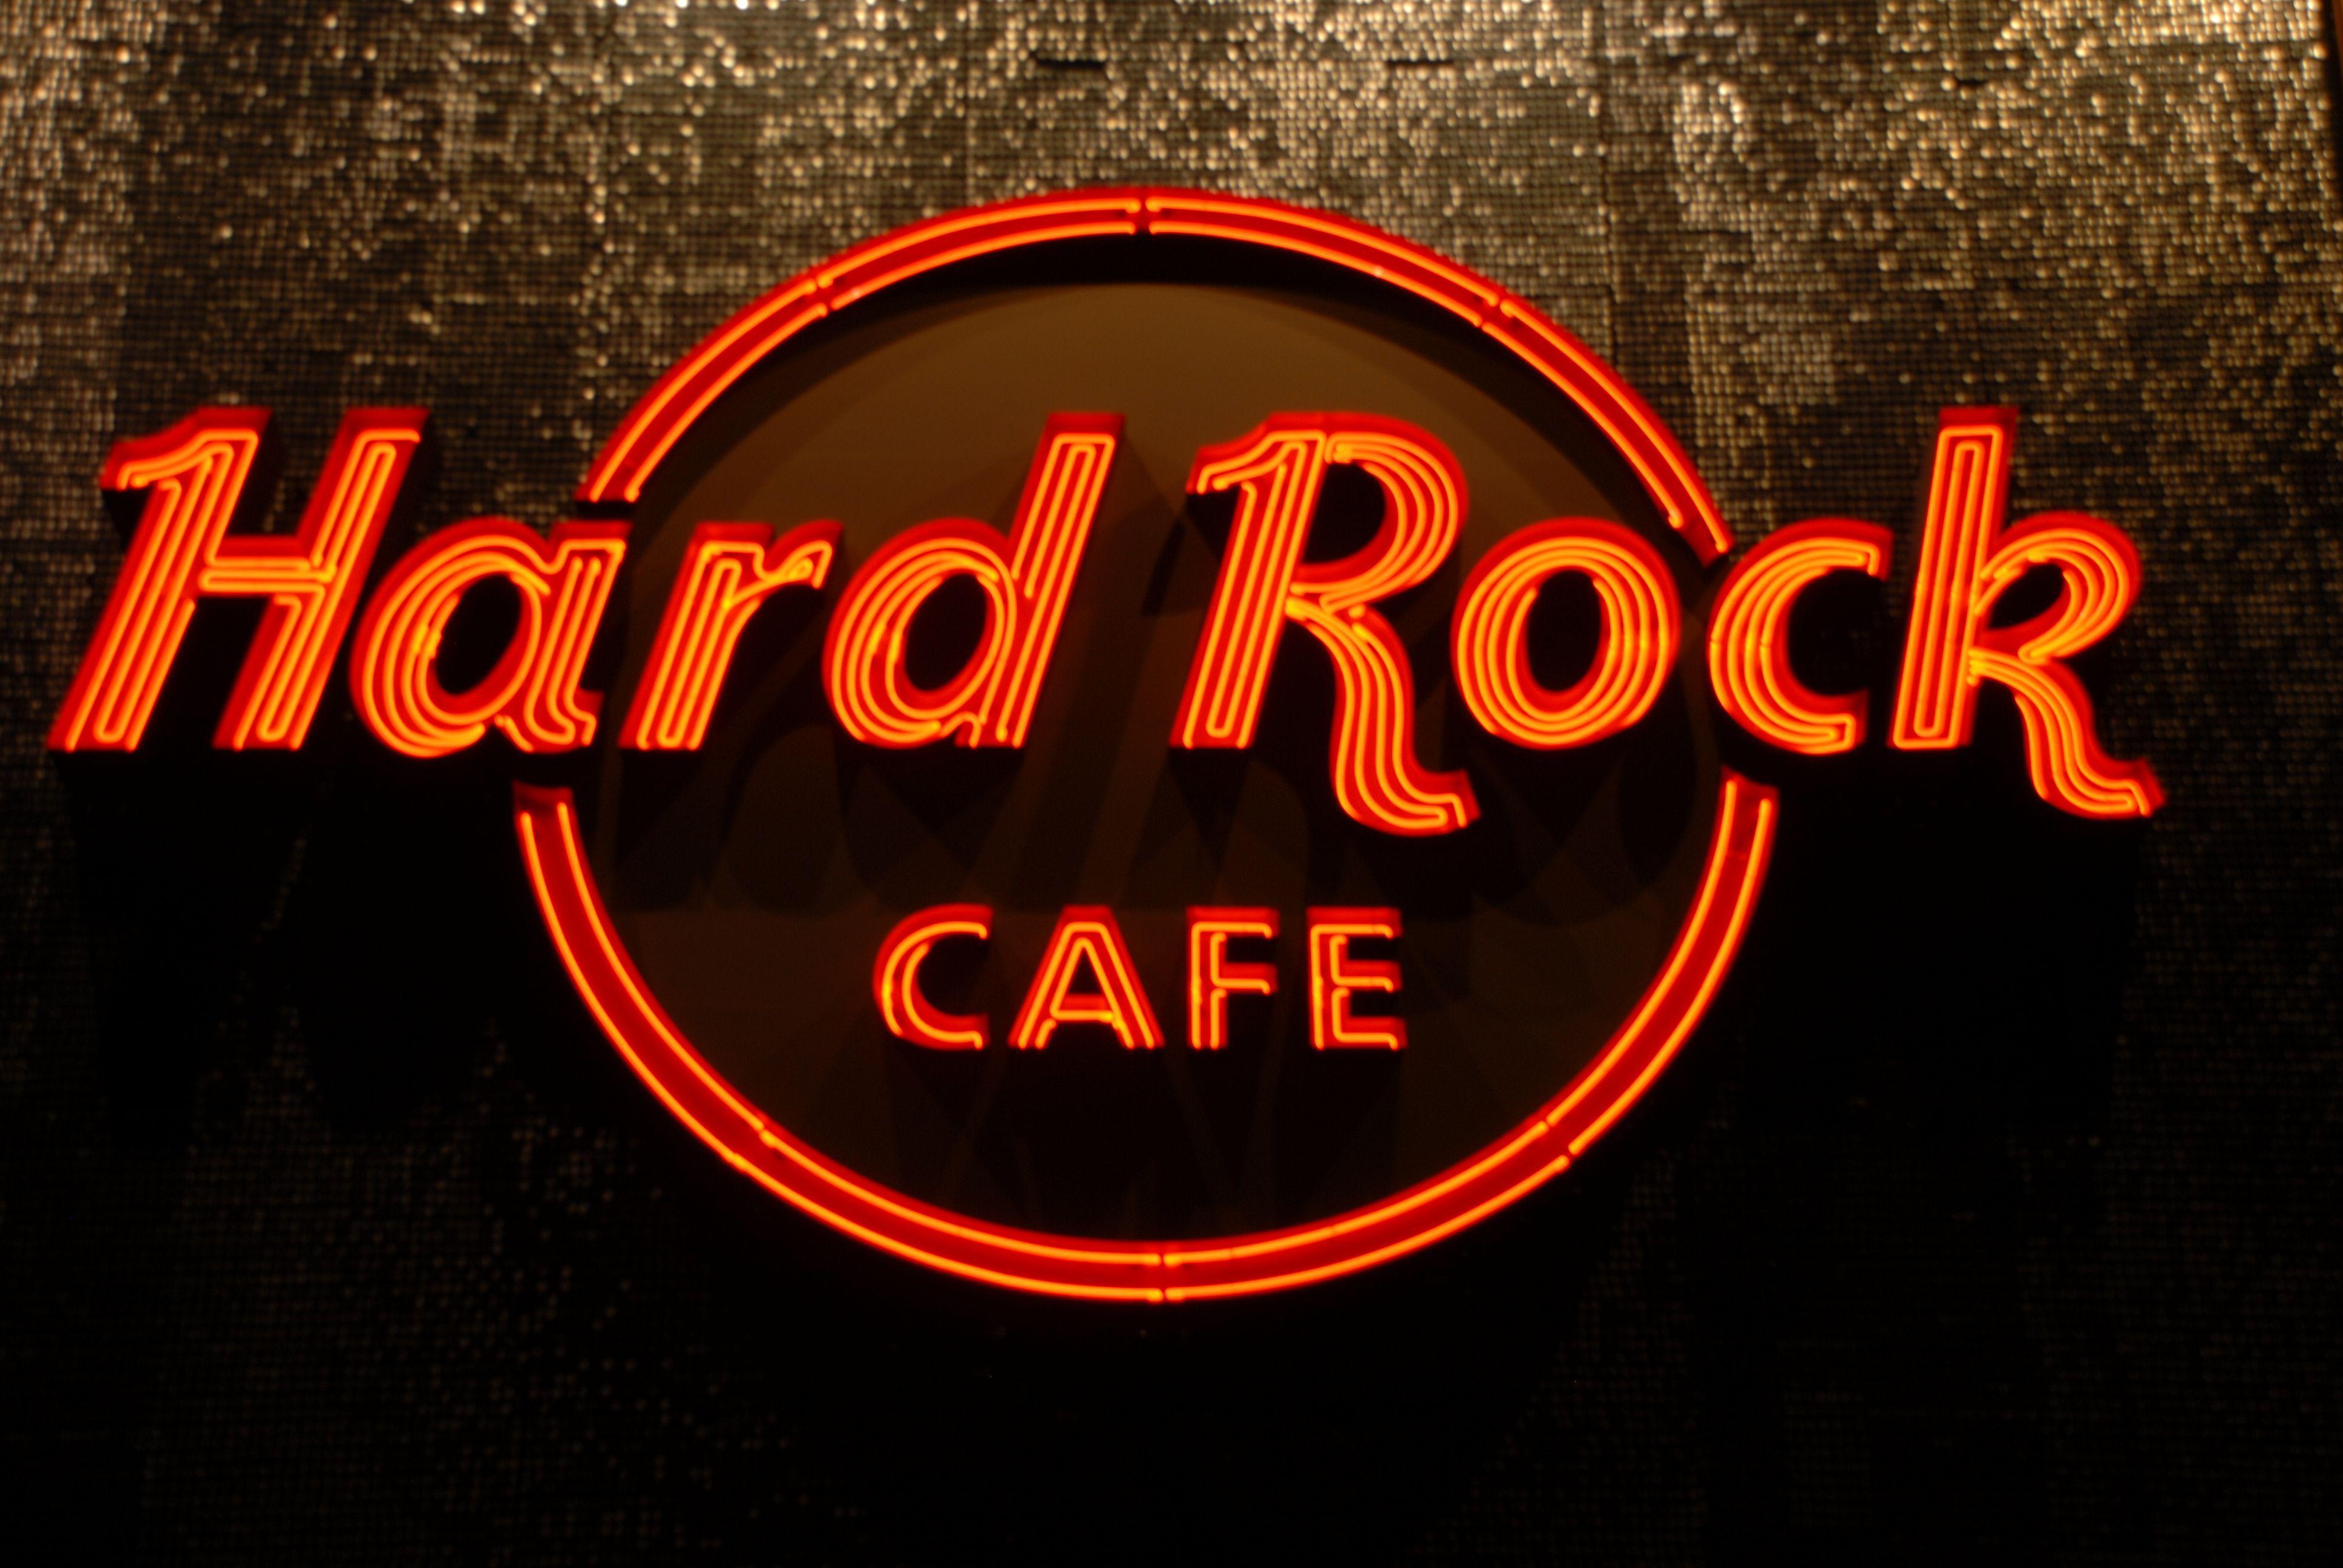 Hard Rock Cafe Wallpaper Image